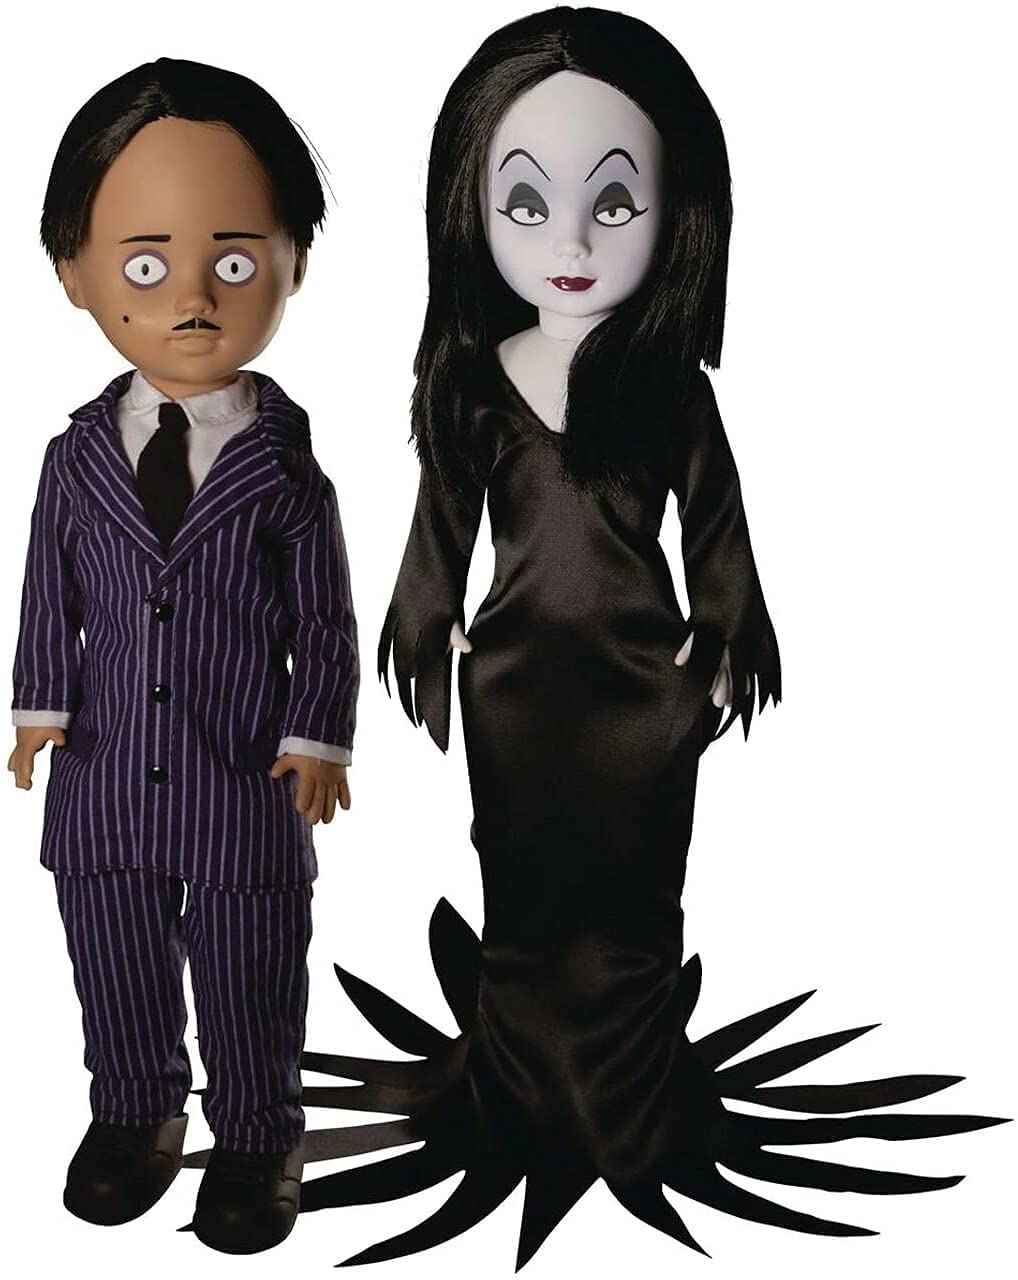 Gomez & Morticia (The Addams Family) Living Dead Dolls Mezco Figures